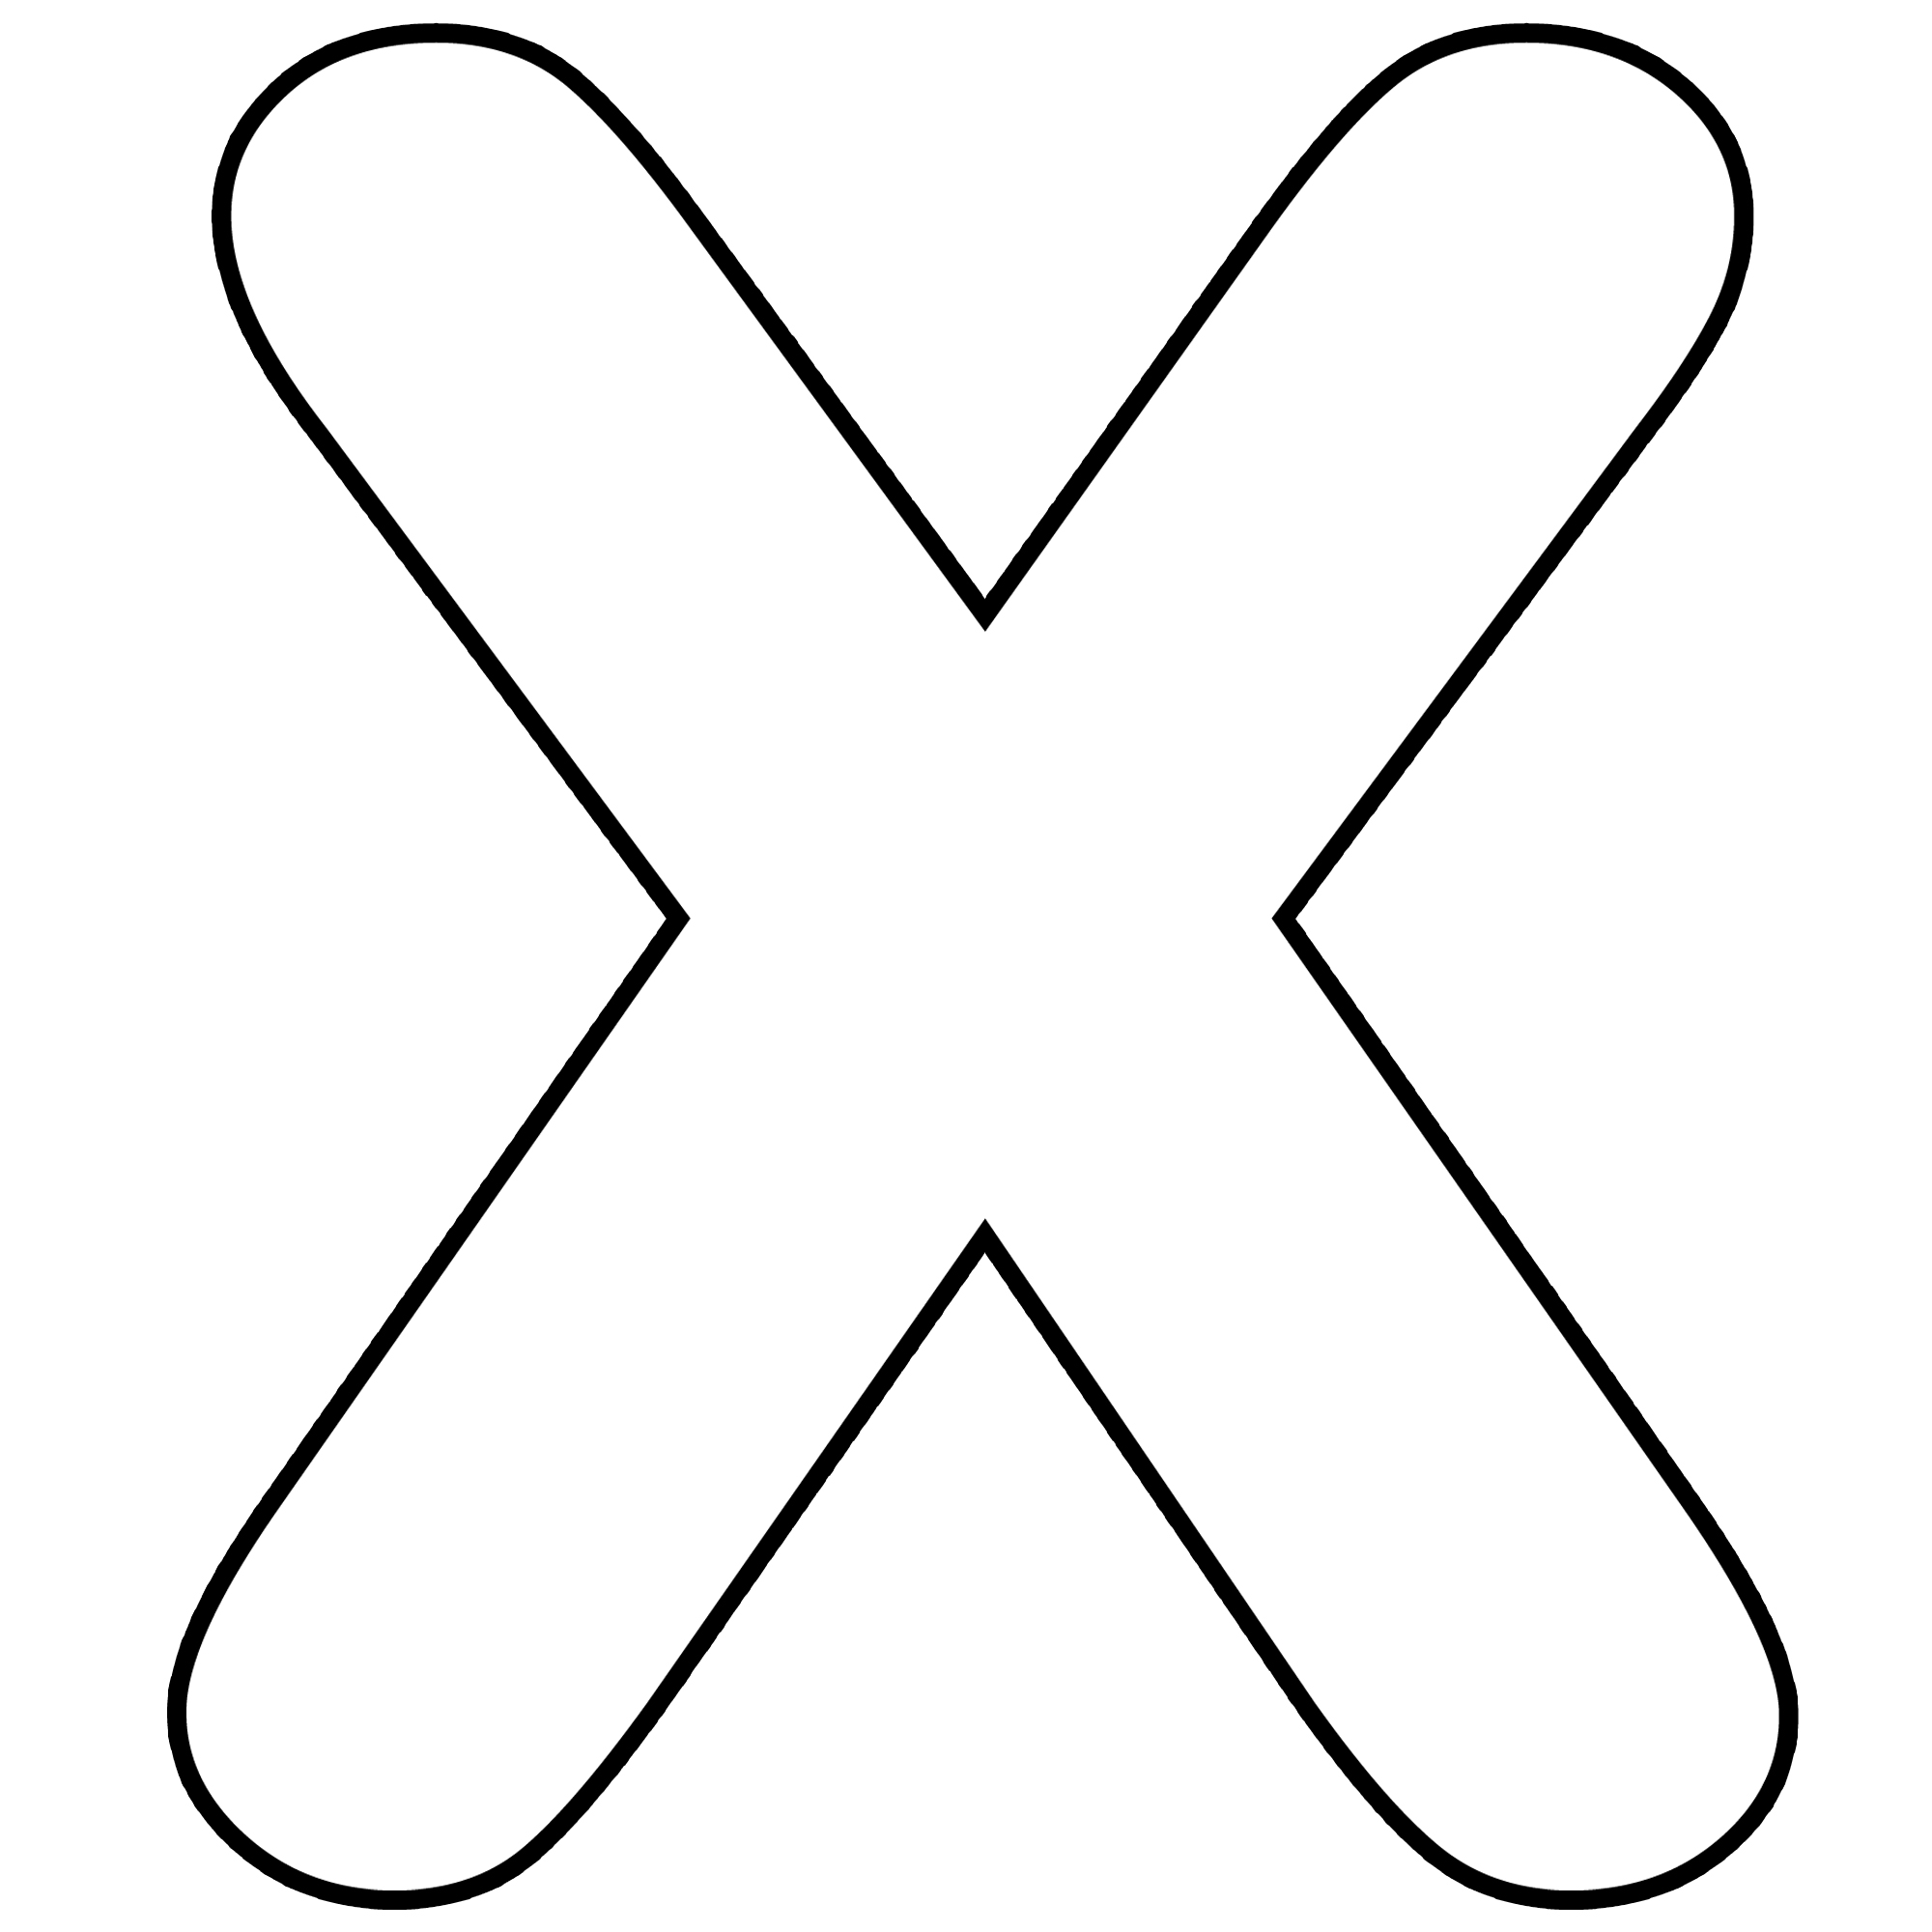 1000+ images about PRESCHOOL IDEAS- the letter X